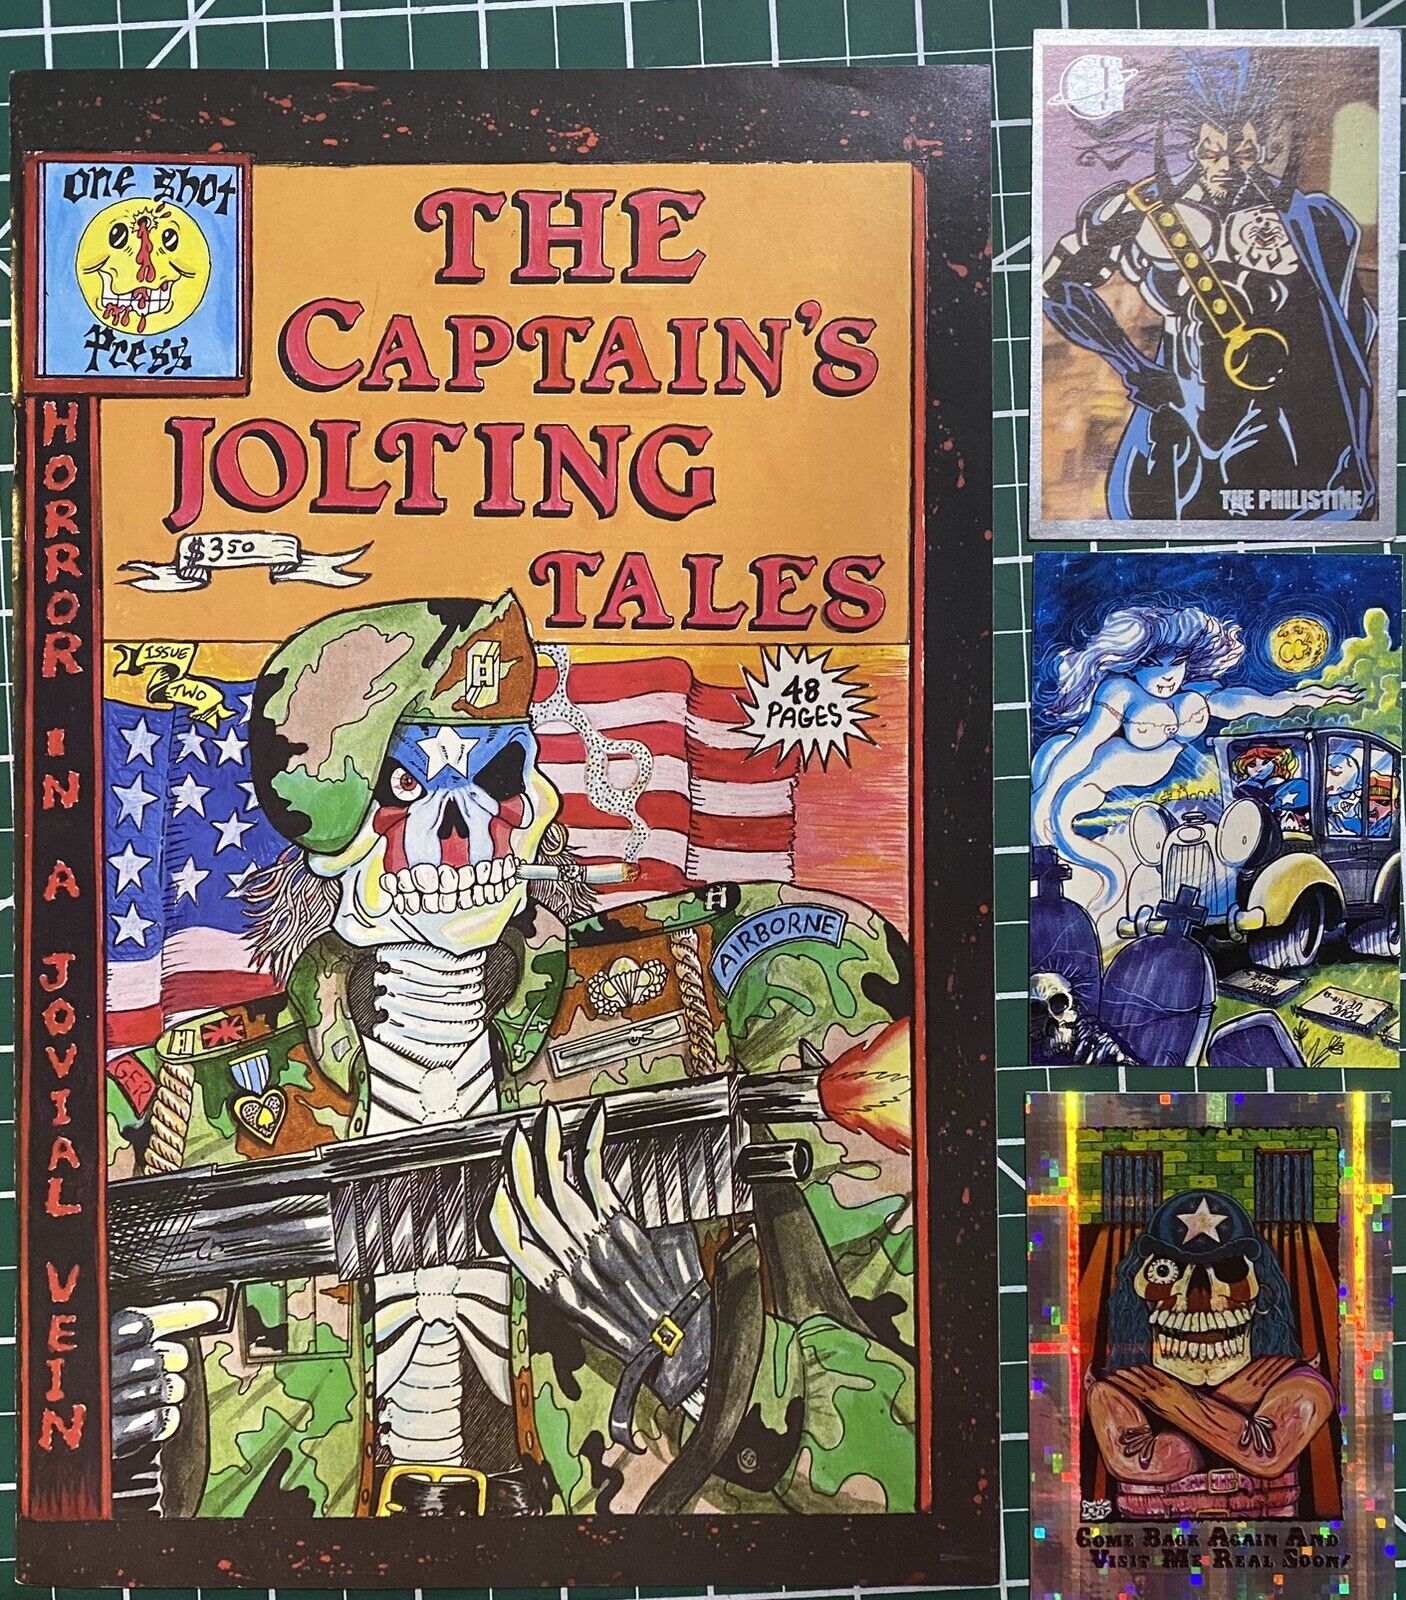 The Captain's Jolting Tales #2, One Shot Press, 1991, David C. J. Bunn + Cards